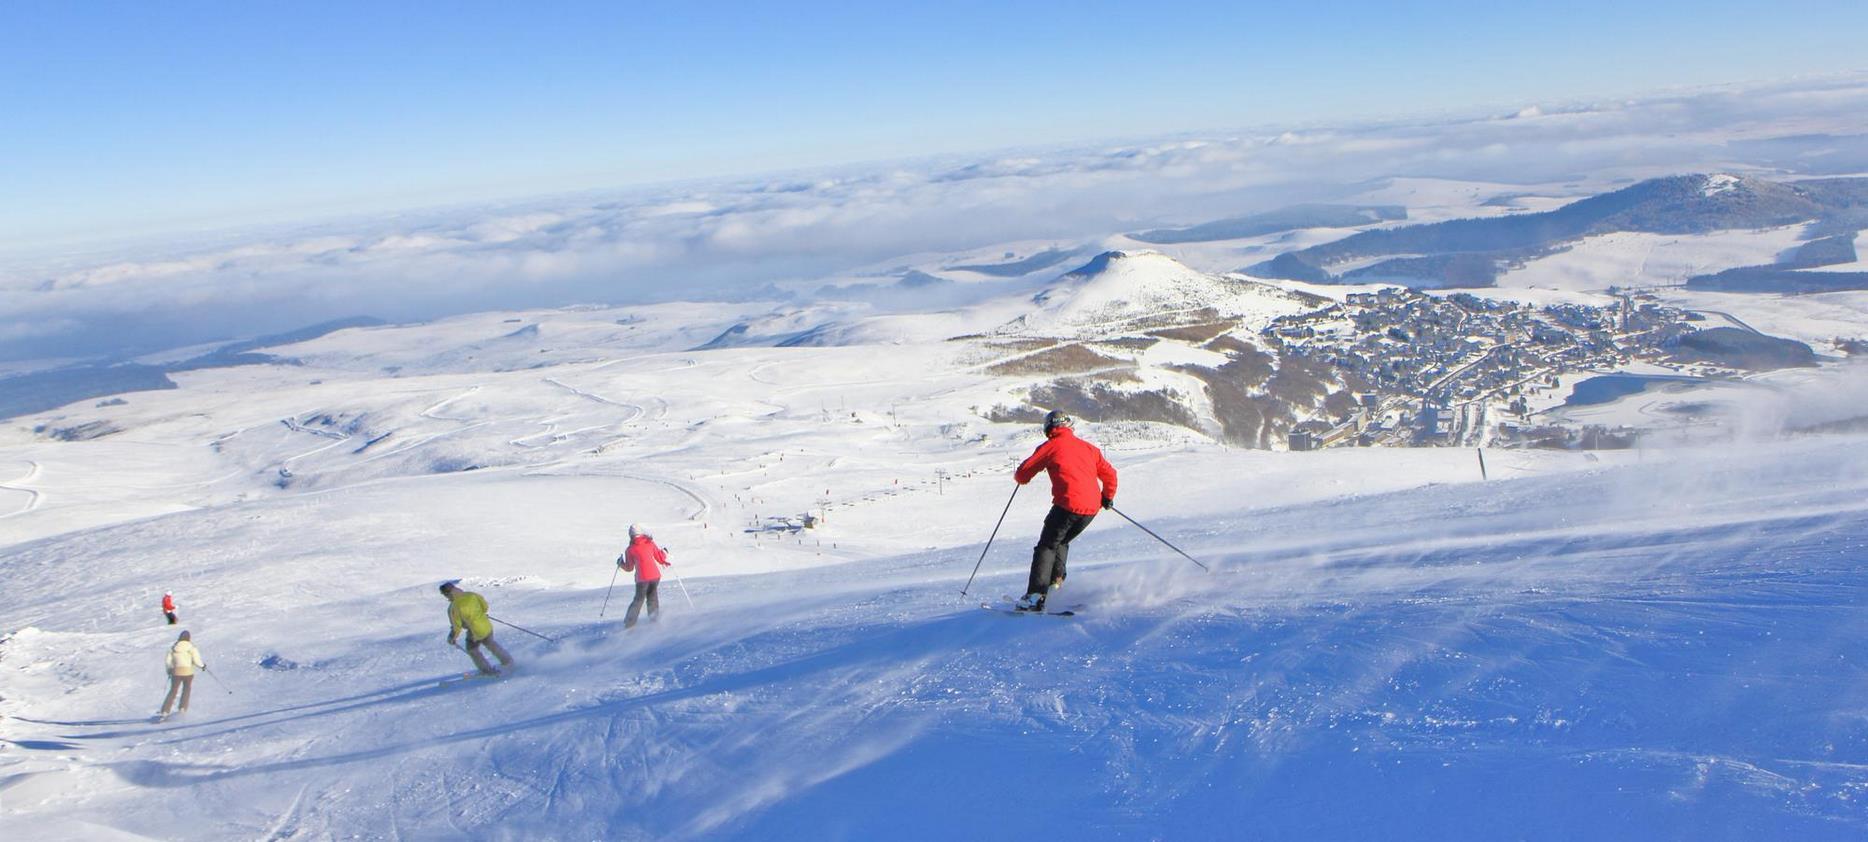 Super Besse - family ski descent on the slopes of the resort